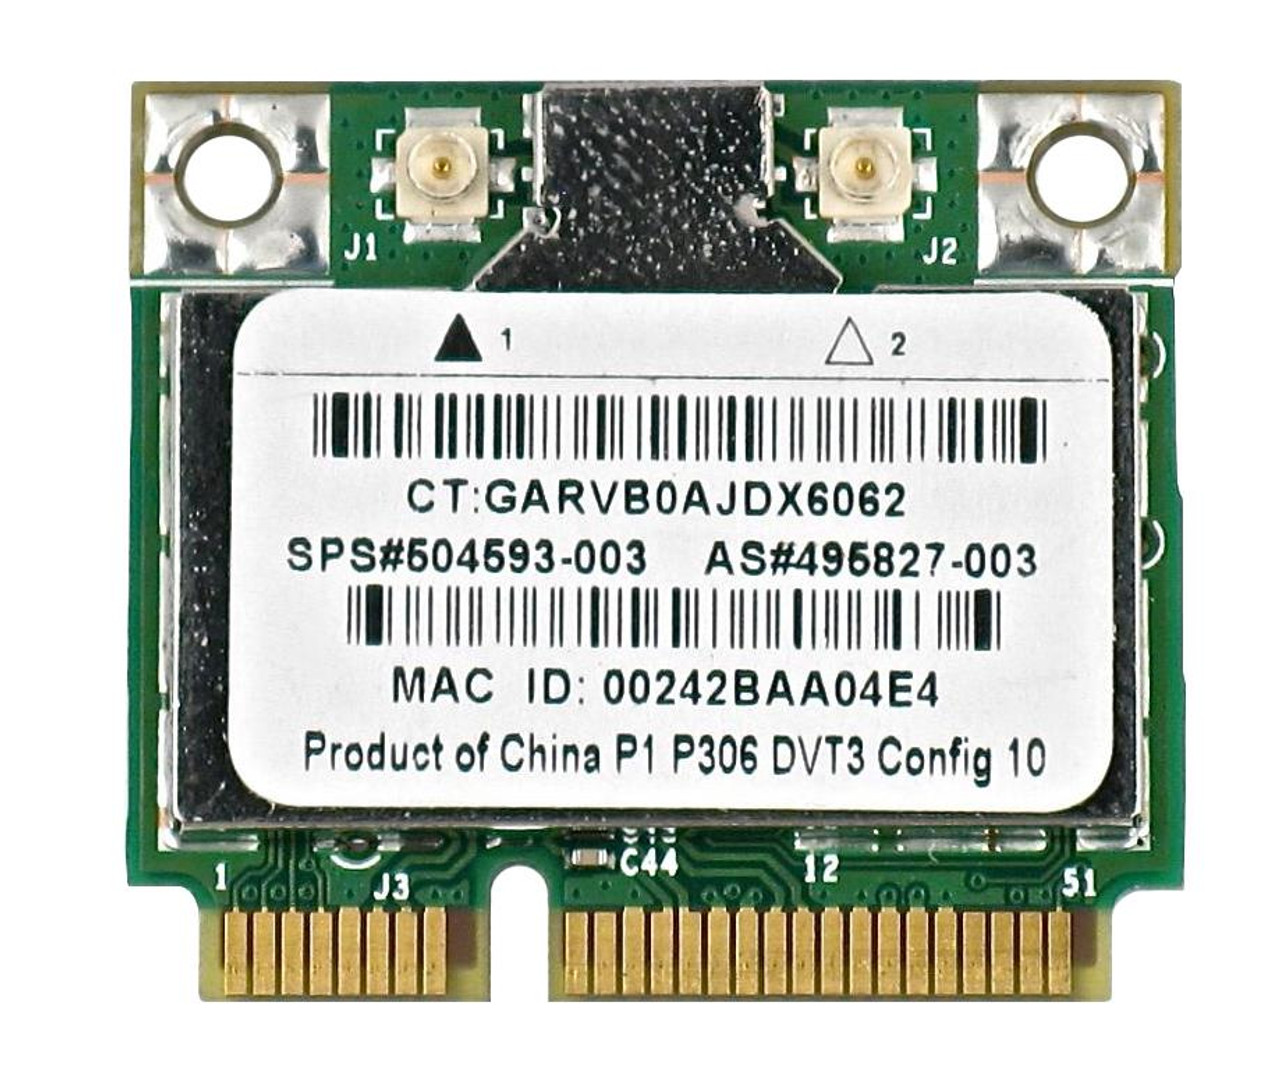 495827-003 HP Broadcom 4312 54Mbps 2.4GHz IEEE 802.11a/b/g Mini PCI Express WLAN Wireless Network Card